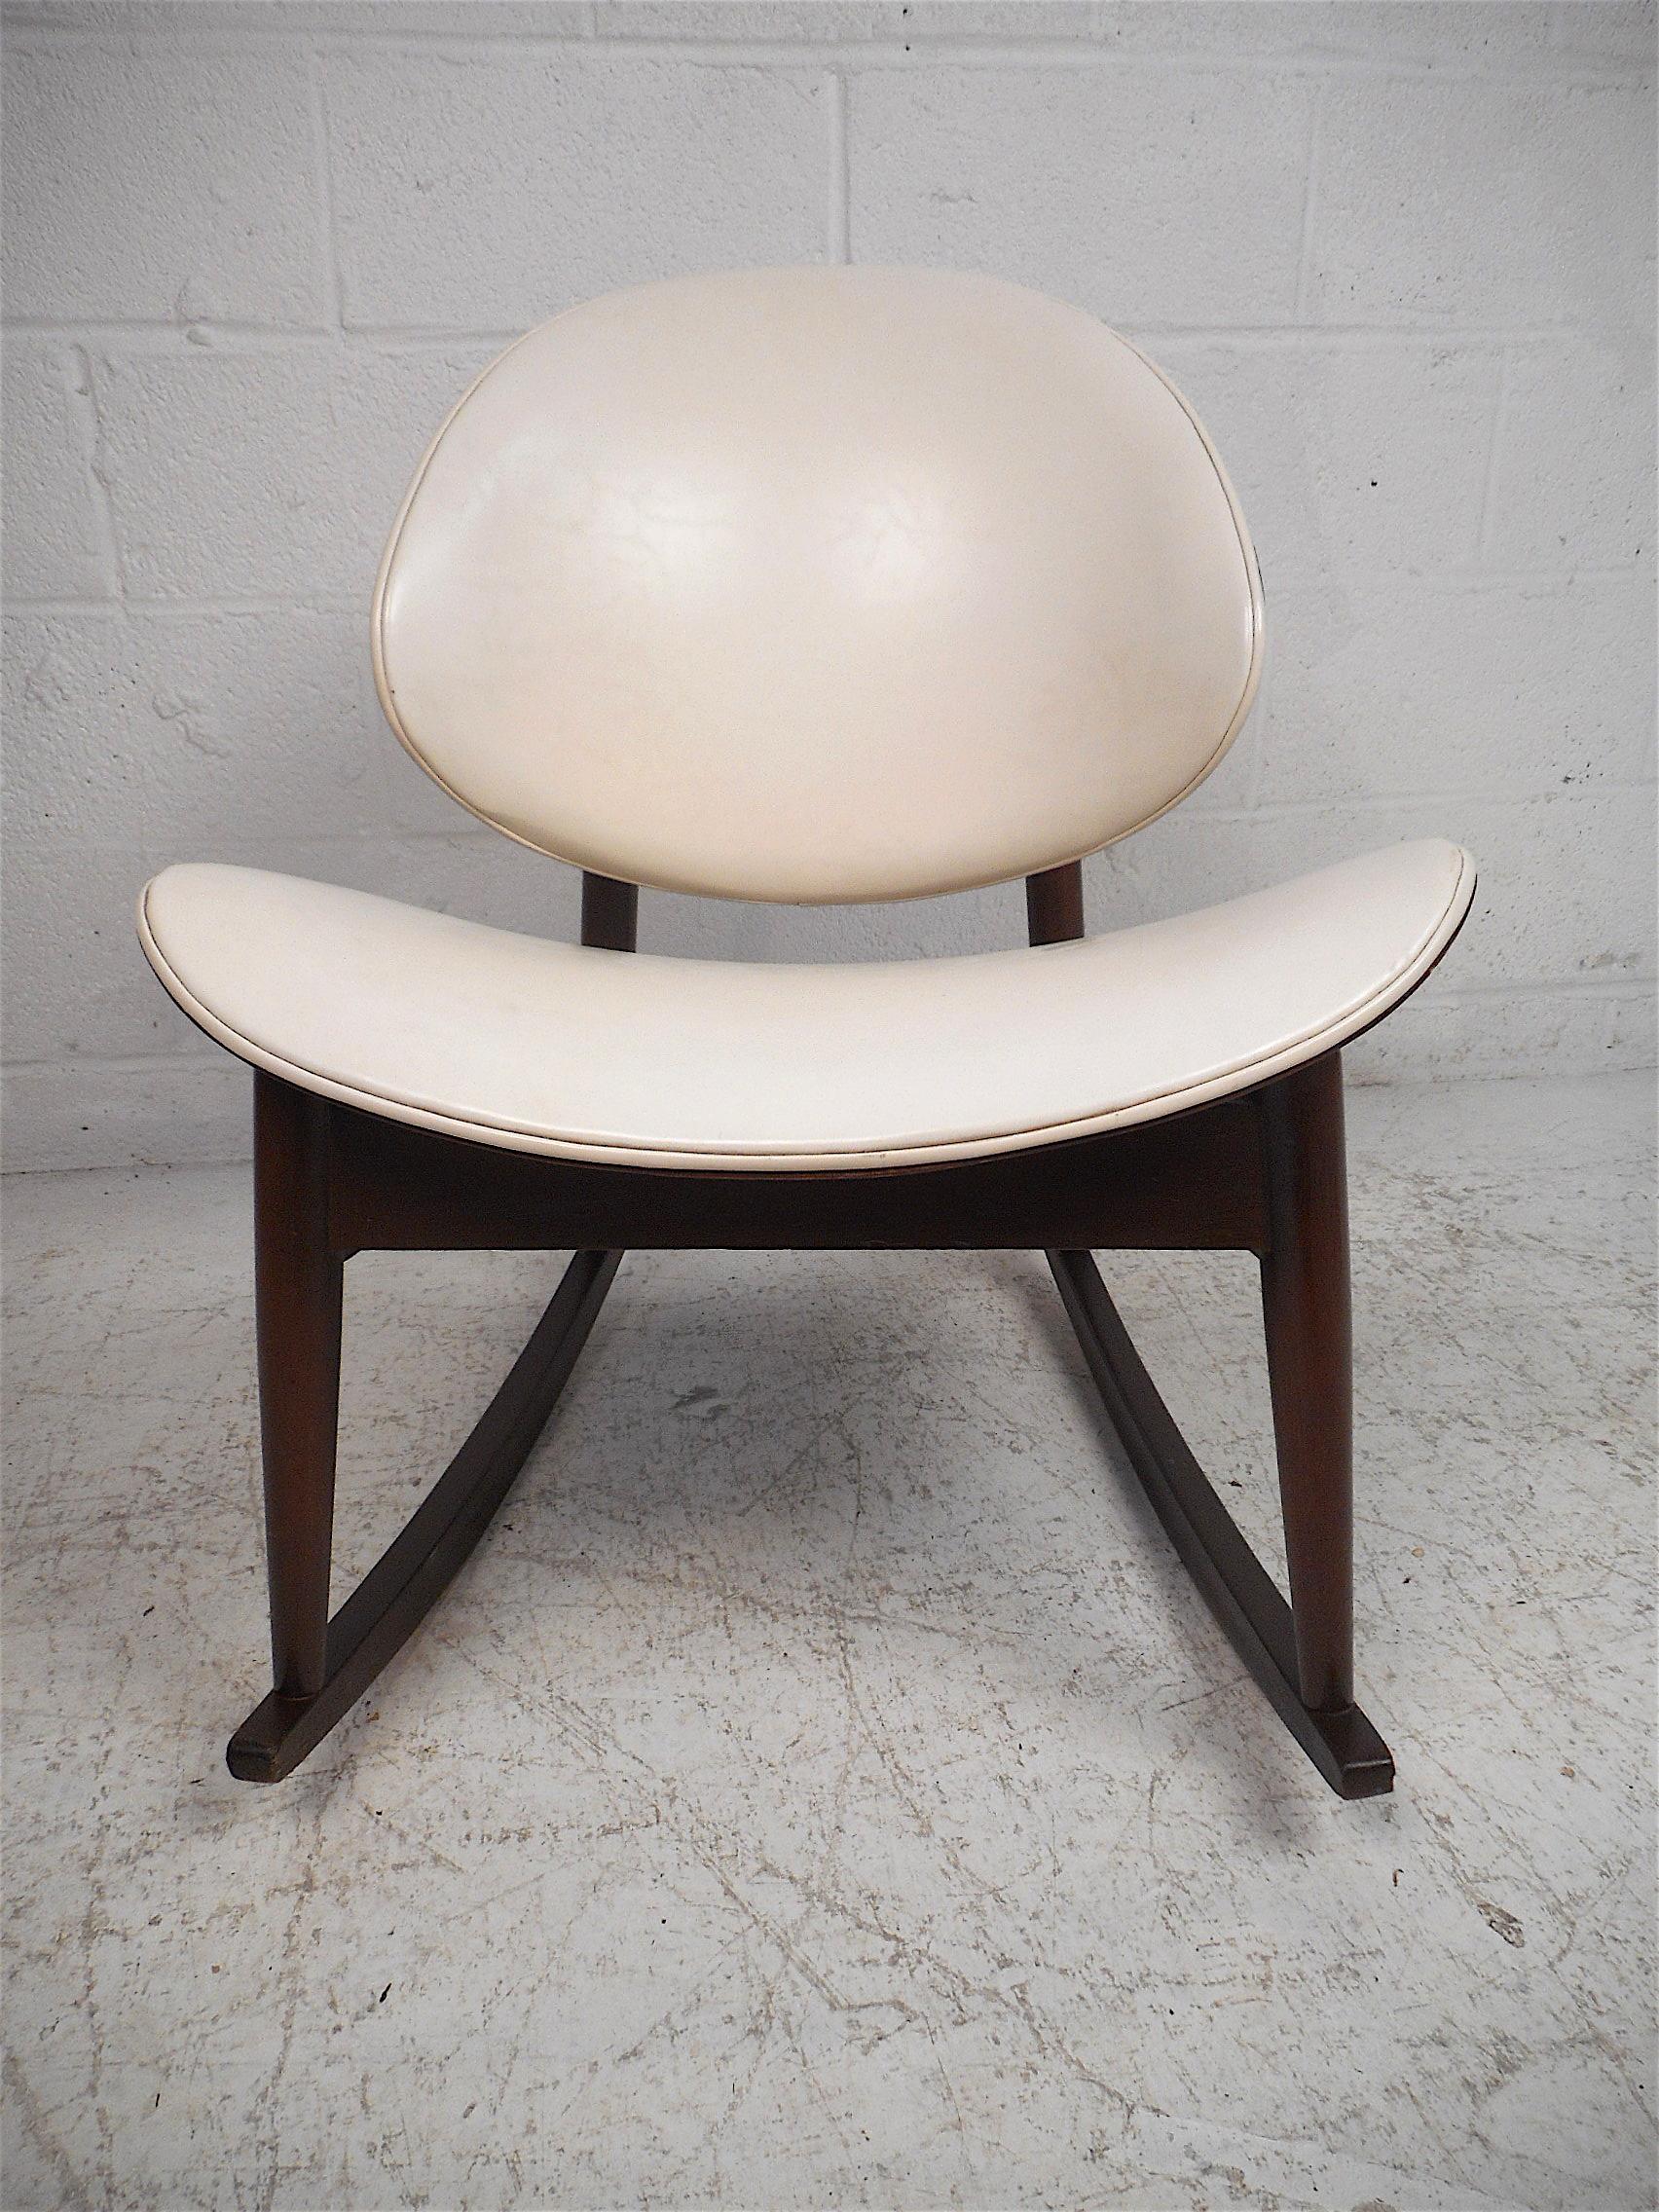 Midcentury Rocking Chair by Kodawood Furniture 2